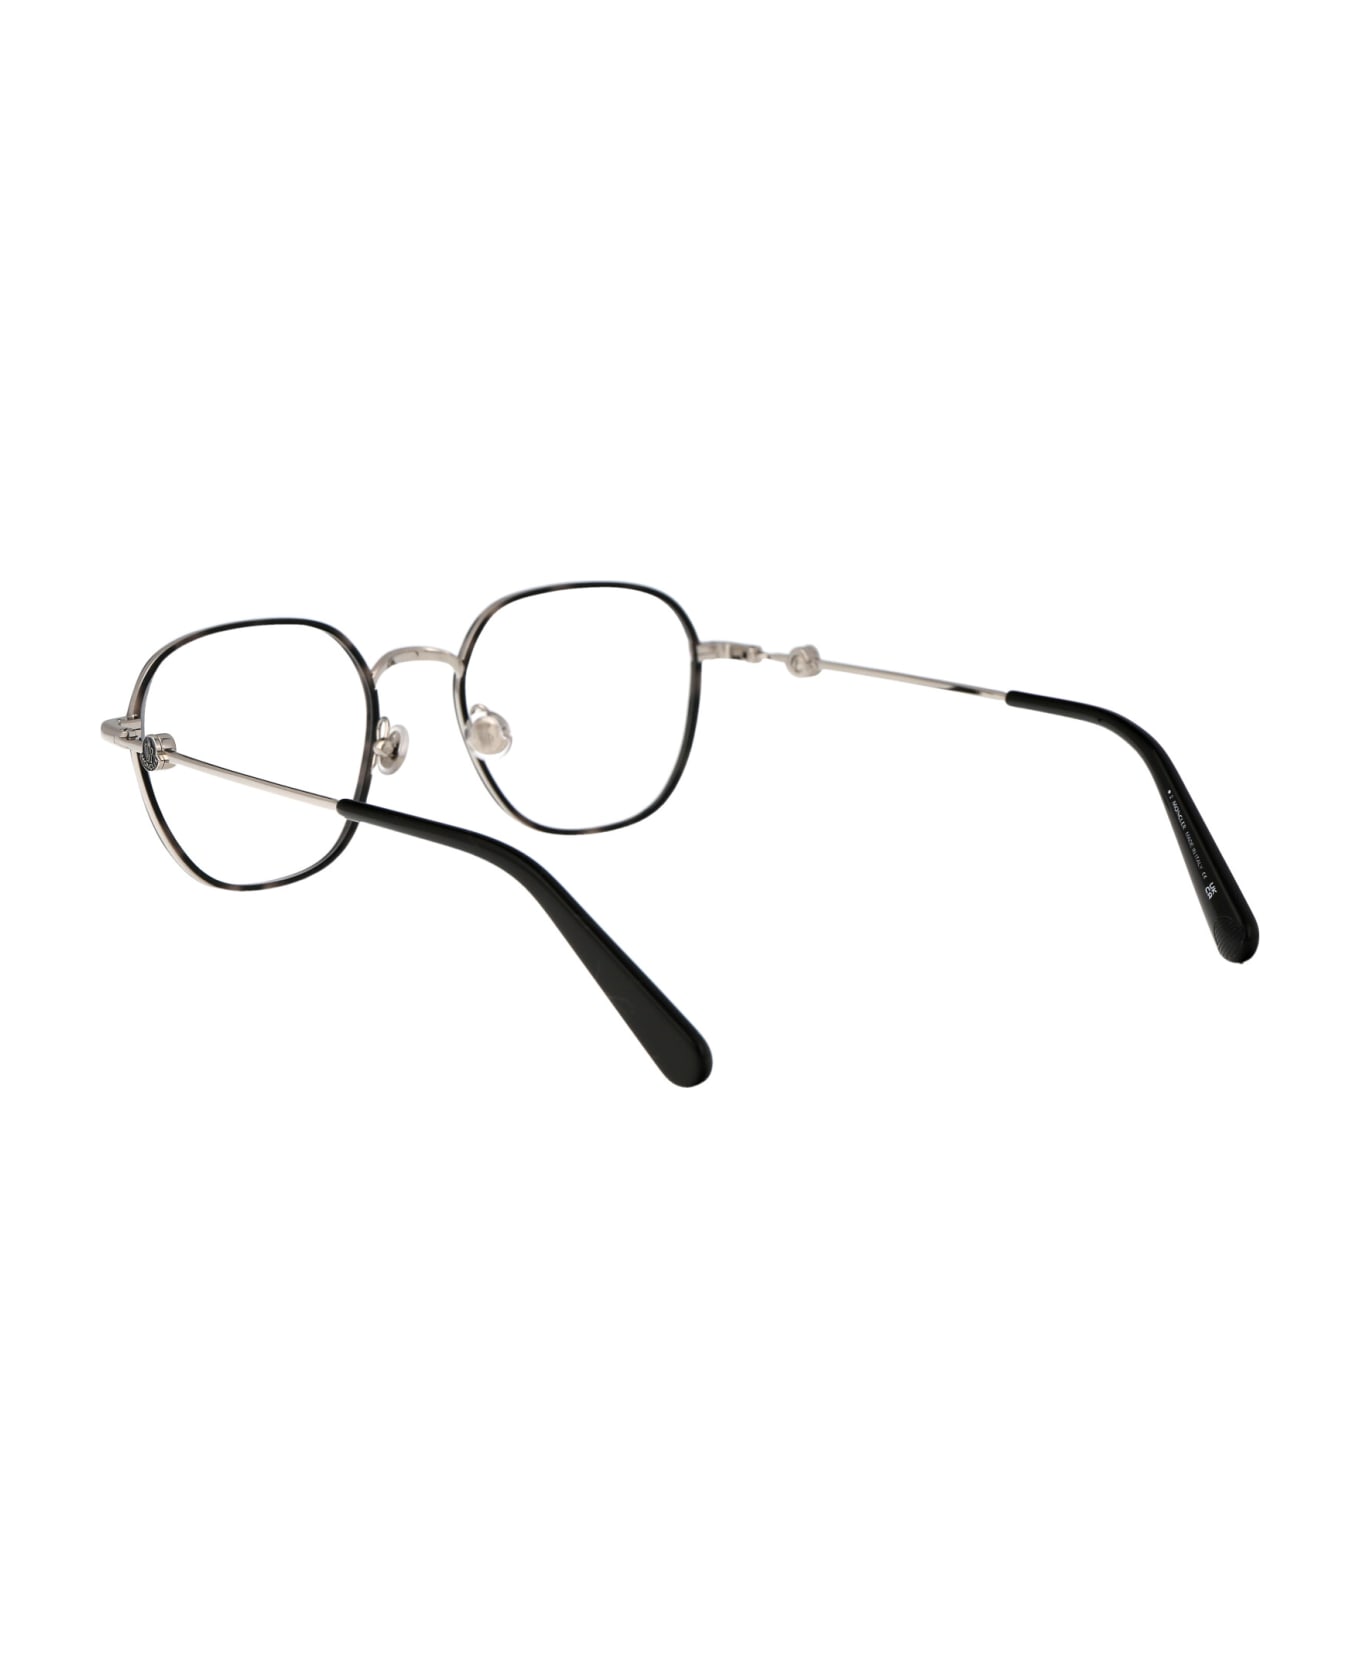 Moncler Eyewear Ml5125 Glasses - 016 Grigio/Avana